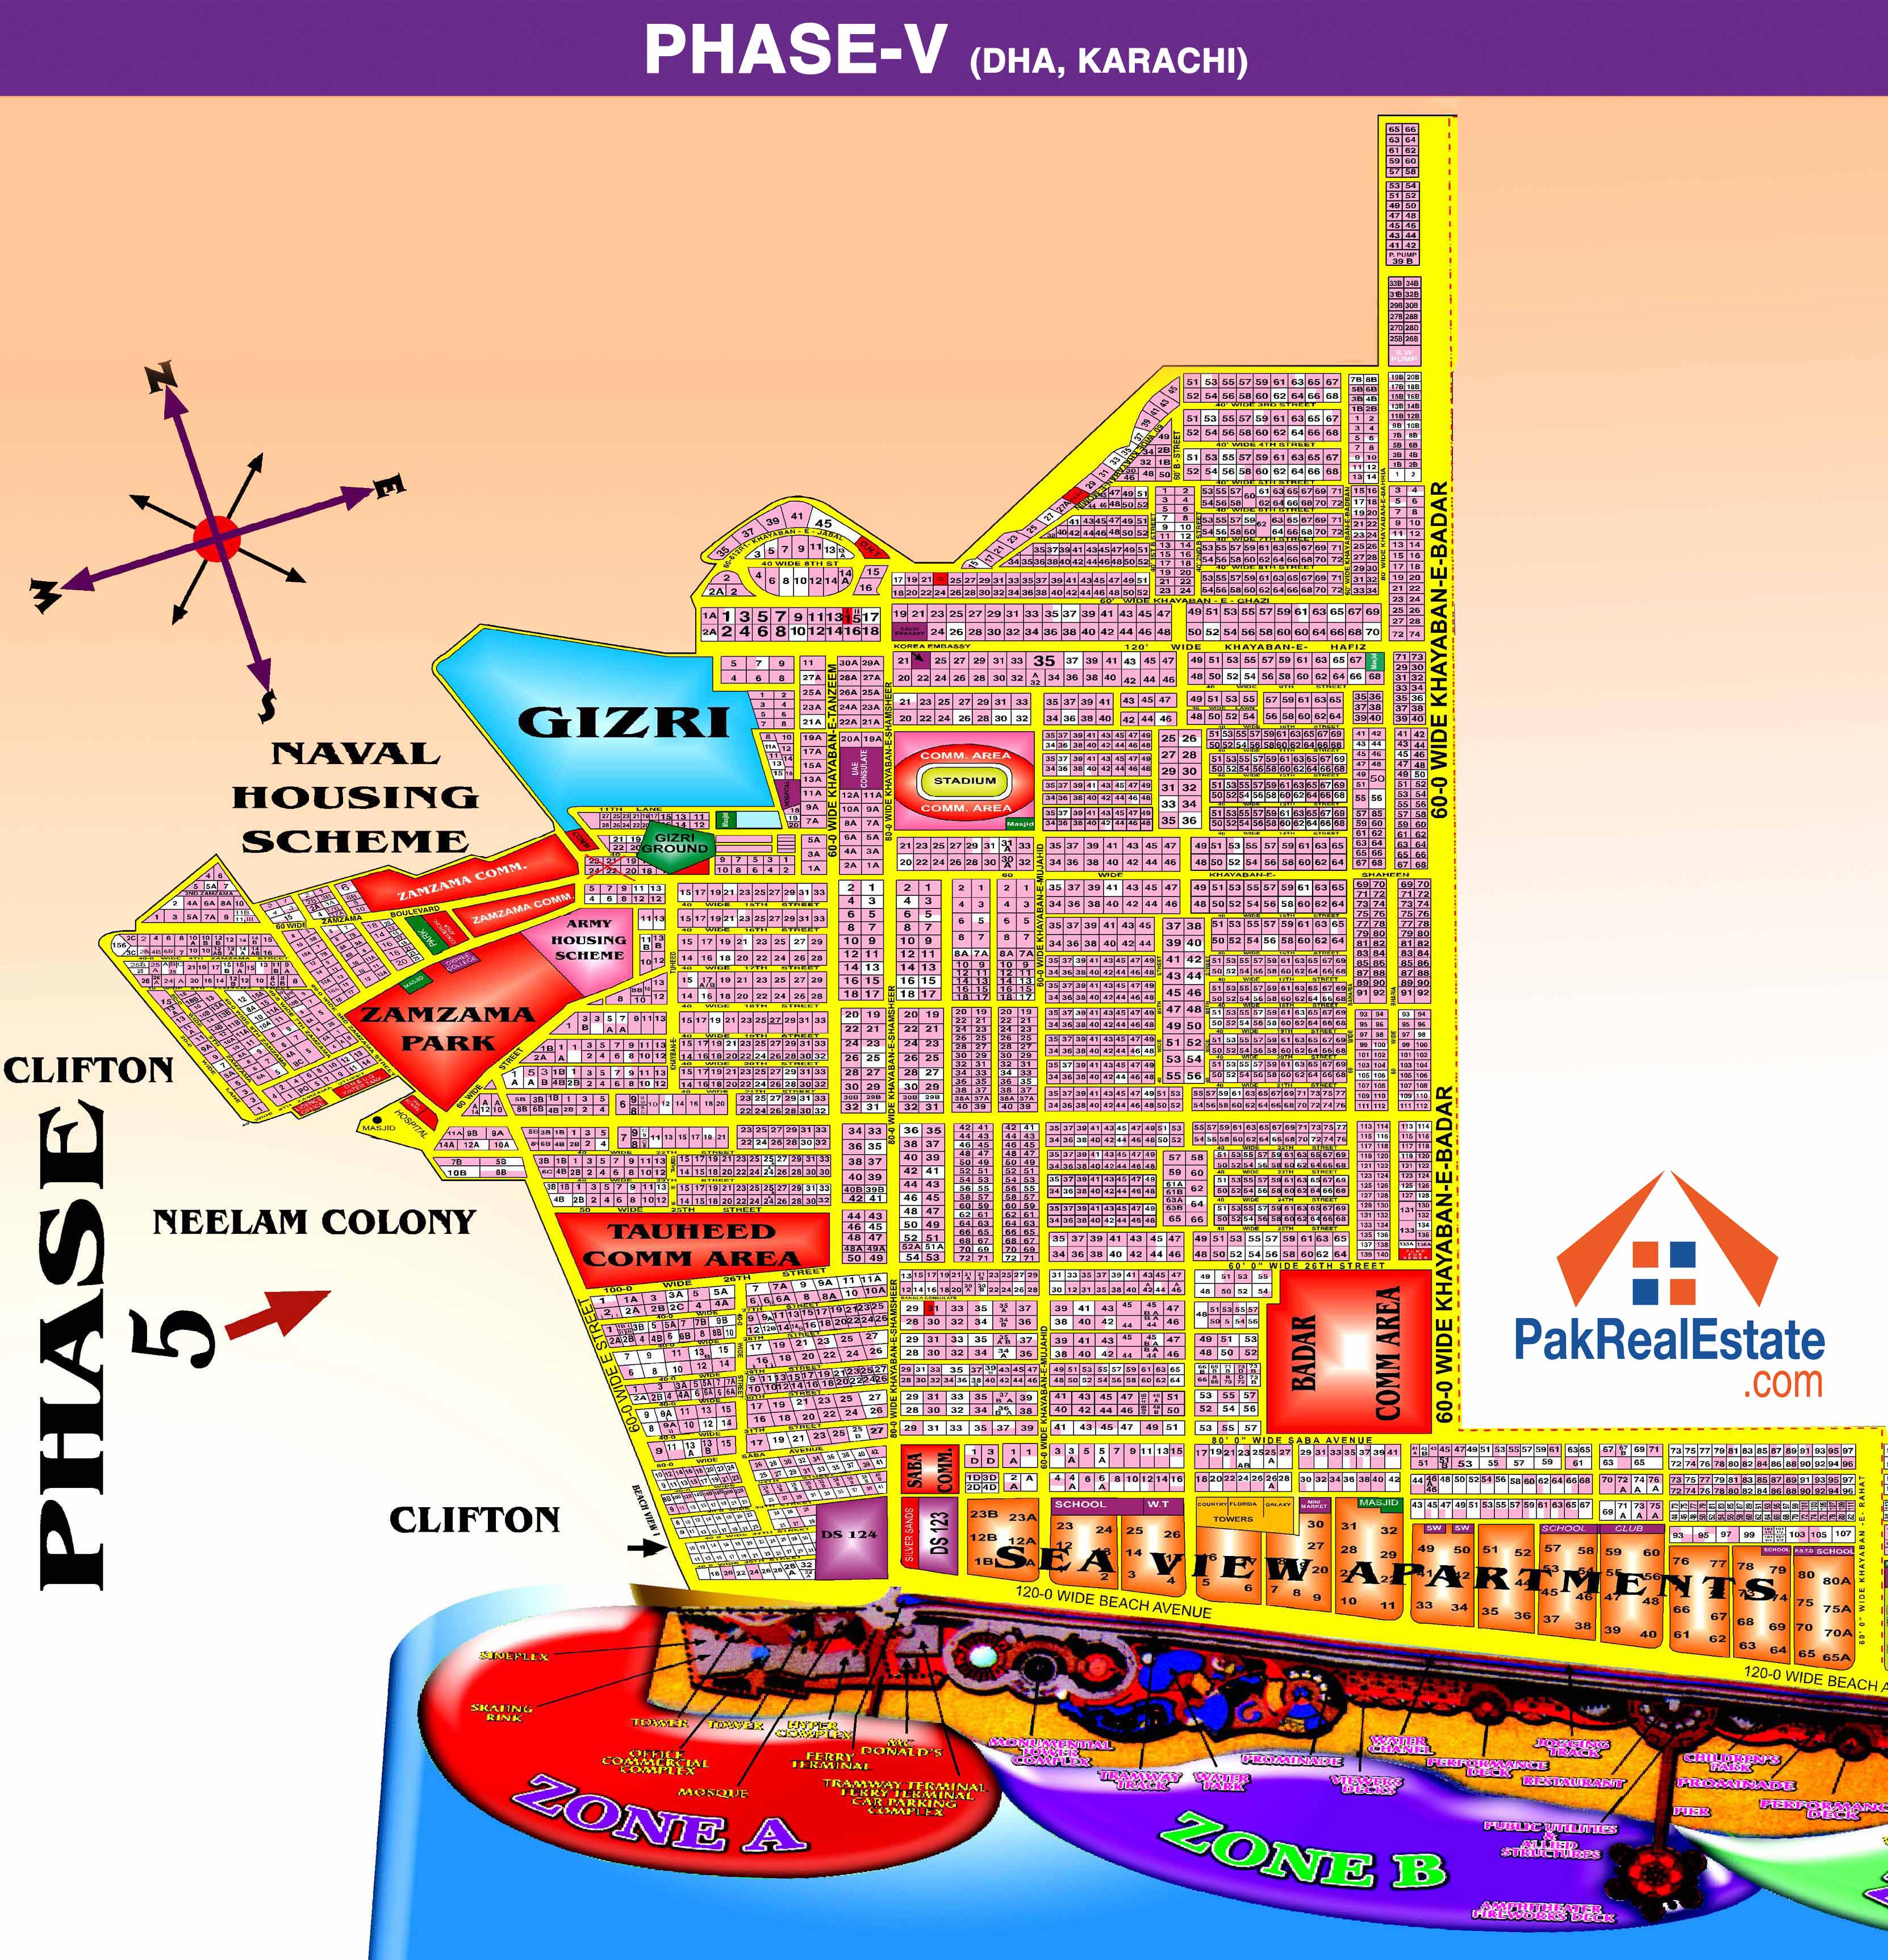 Dha Phase 8 Map